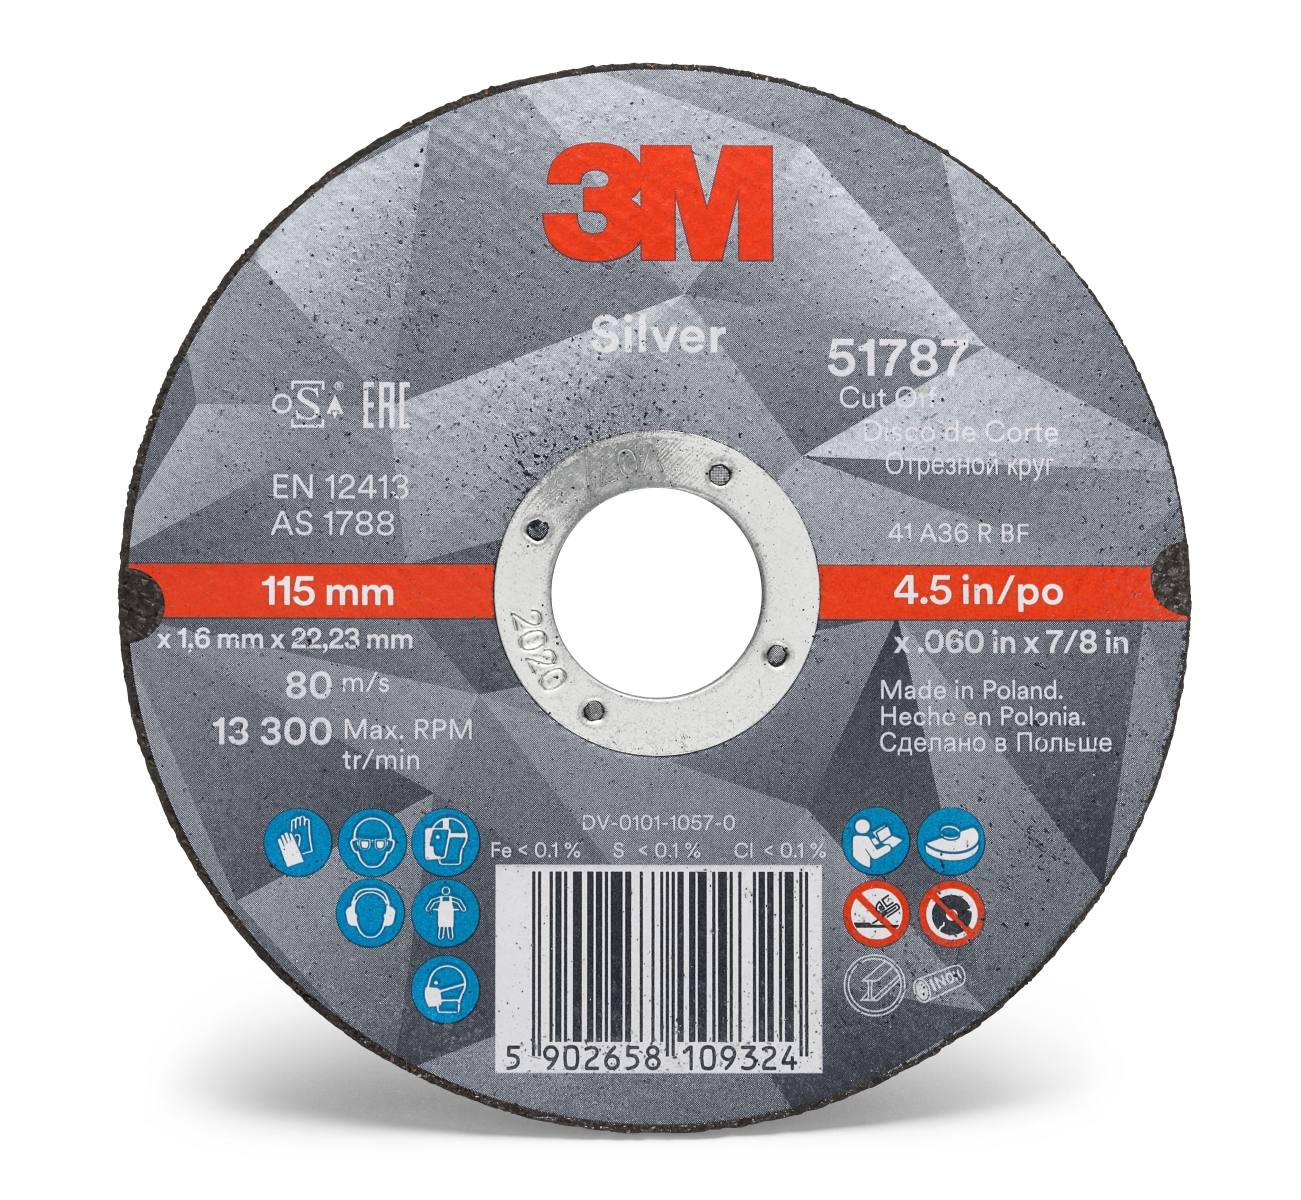 3M Silver Cut-Off Wheel Trennscheibe, 230 mm, 2,5 mm, 22,23 mm, T42, 51805